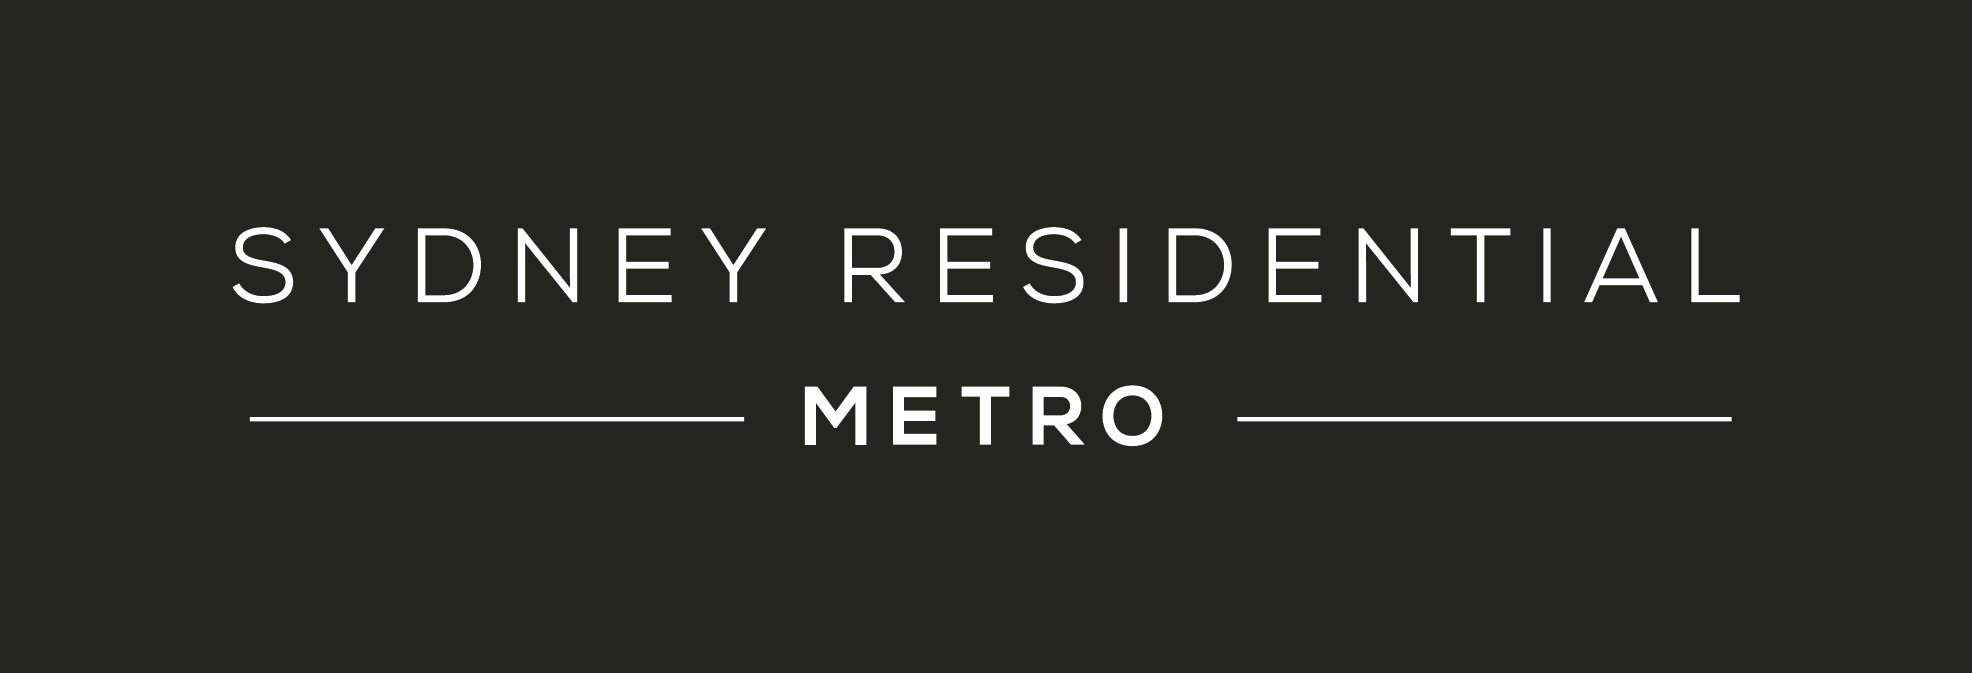 Sydney Residential Metro